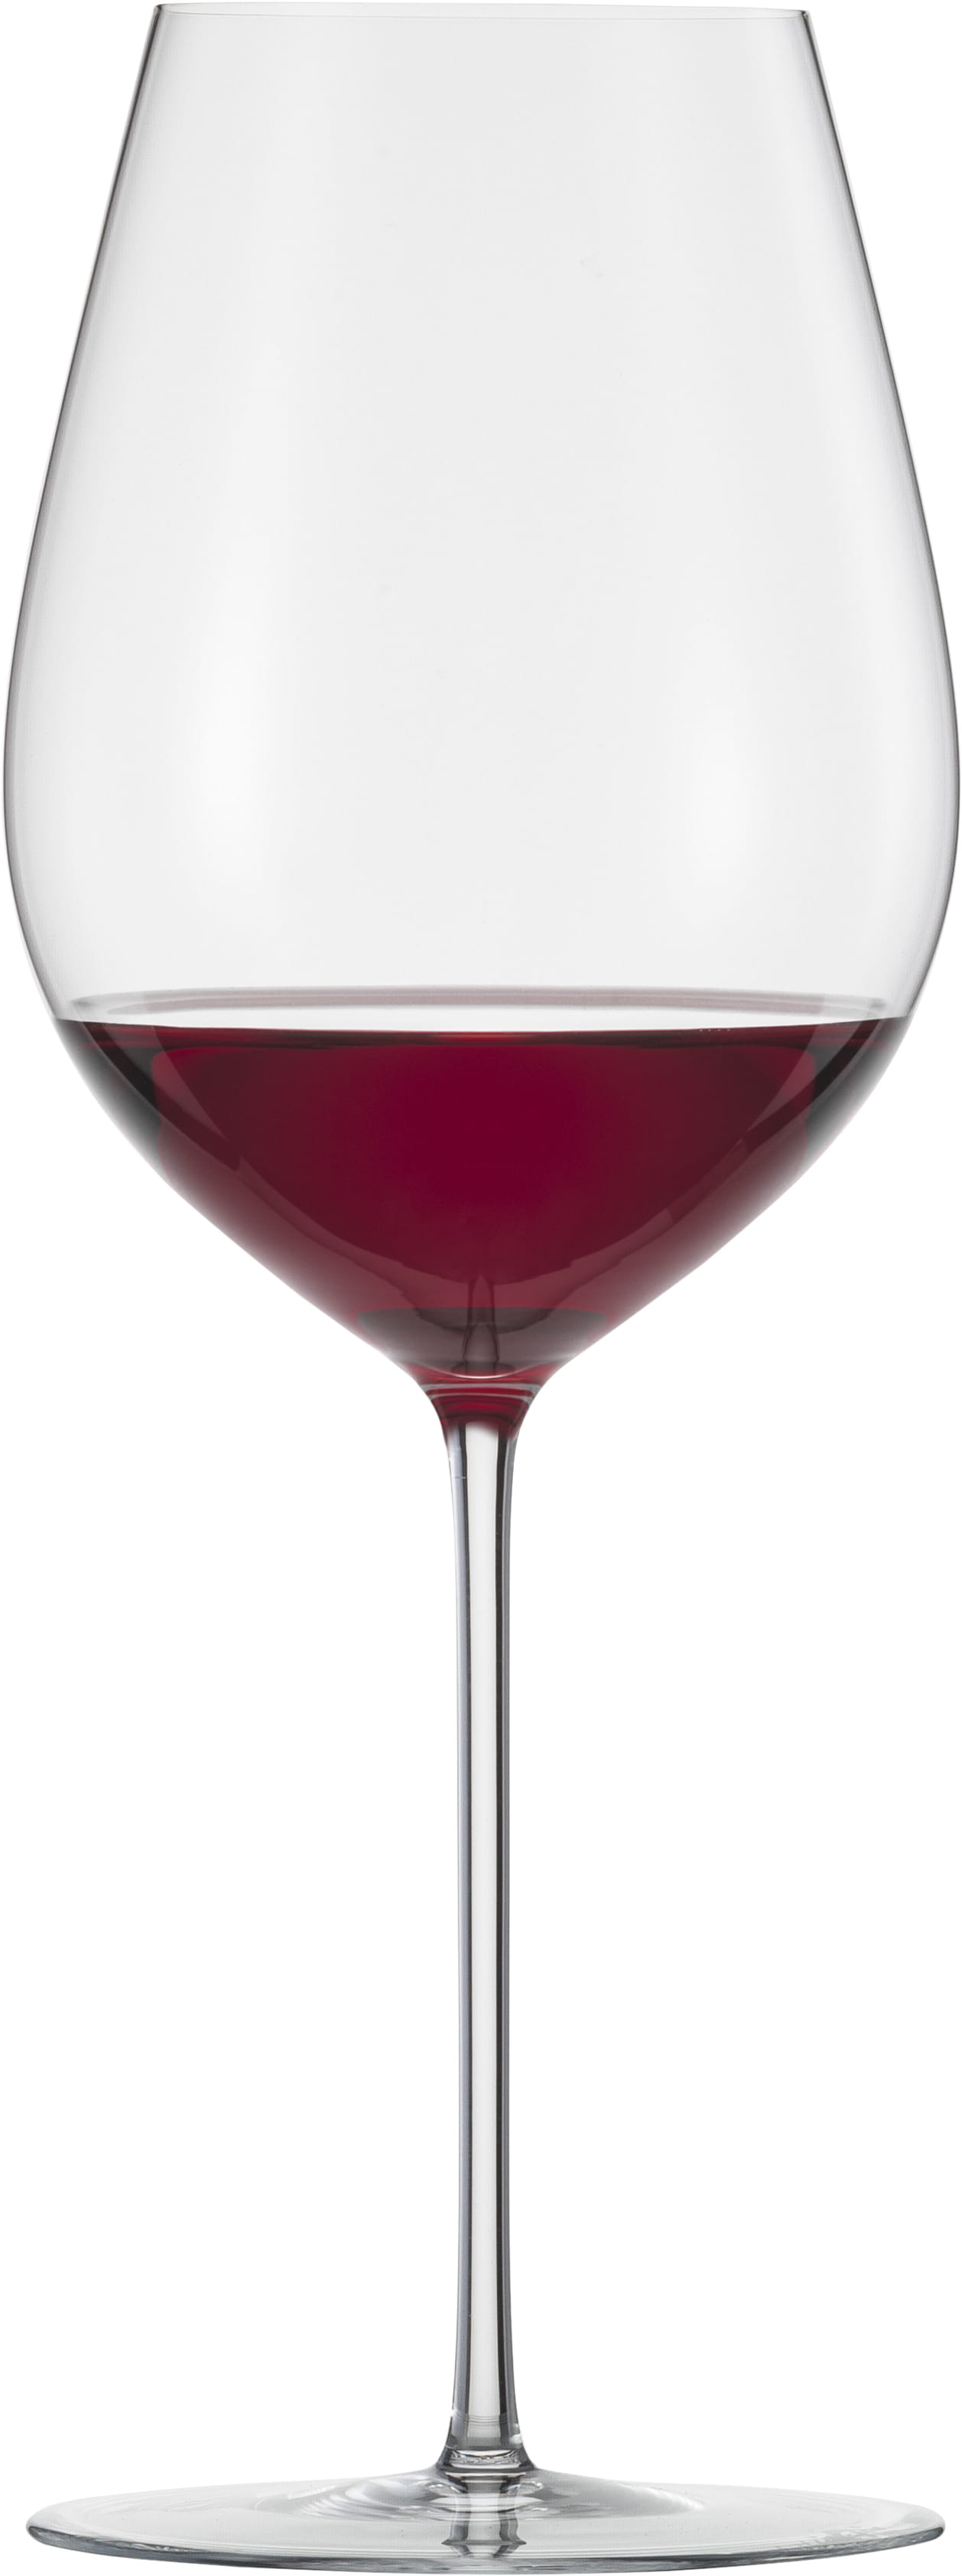 Eisch Glas Unity Sensis plus Bordeauxglas Grand Cru 522/21